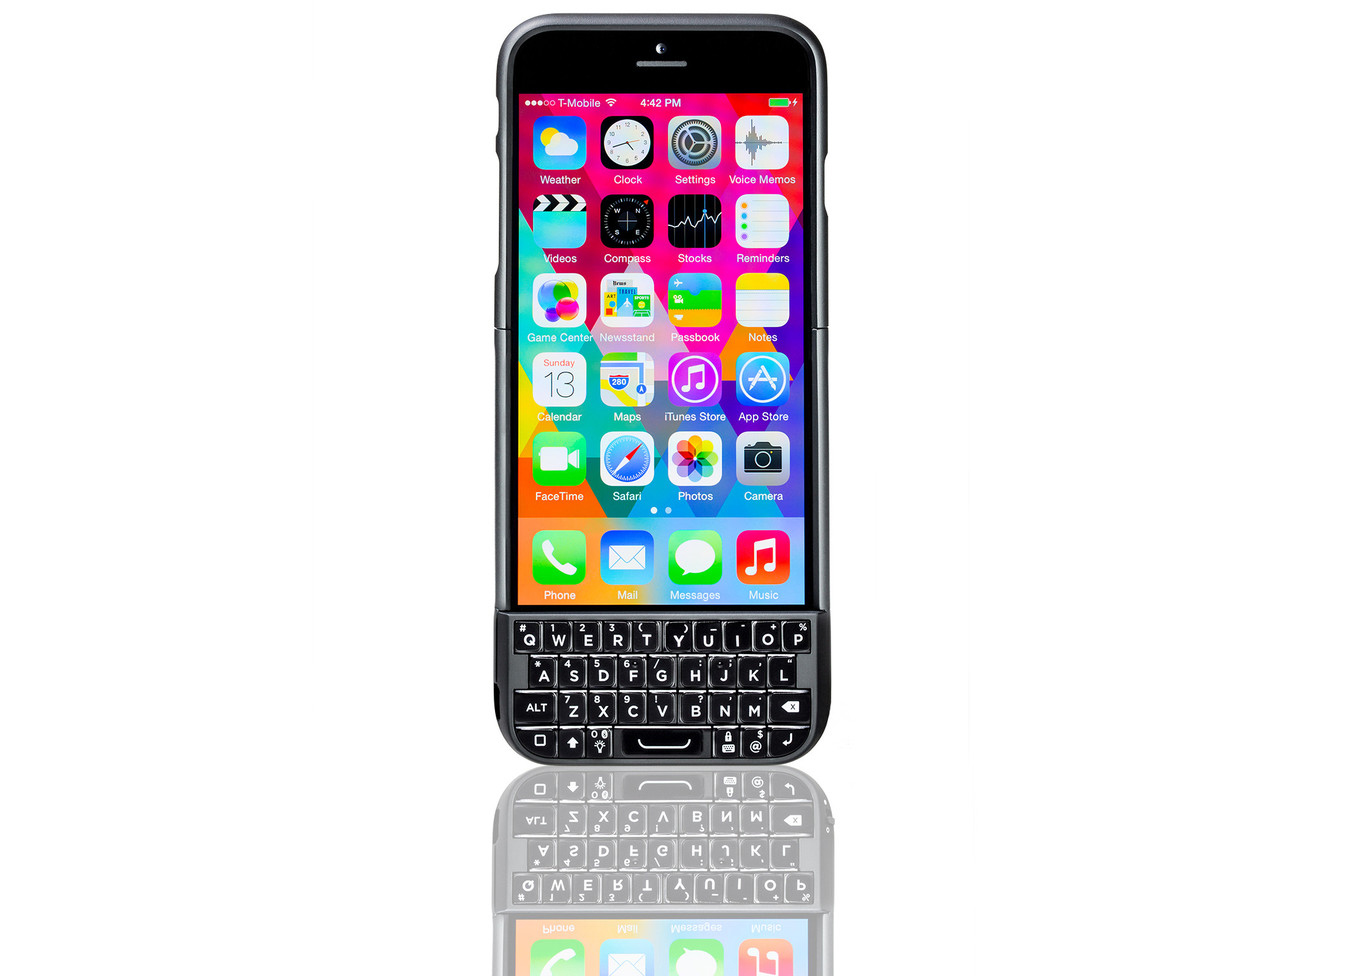 Makers Of Slip-On iPhone Keyboard Sued By BlackBerry Release New Model